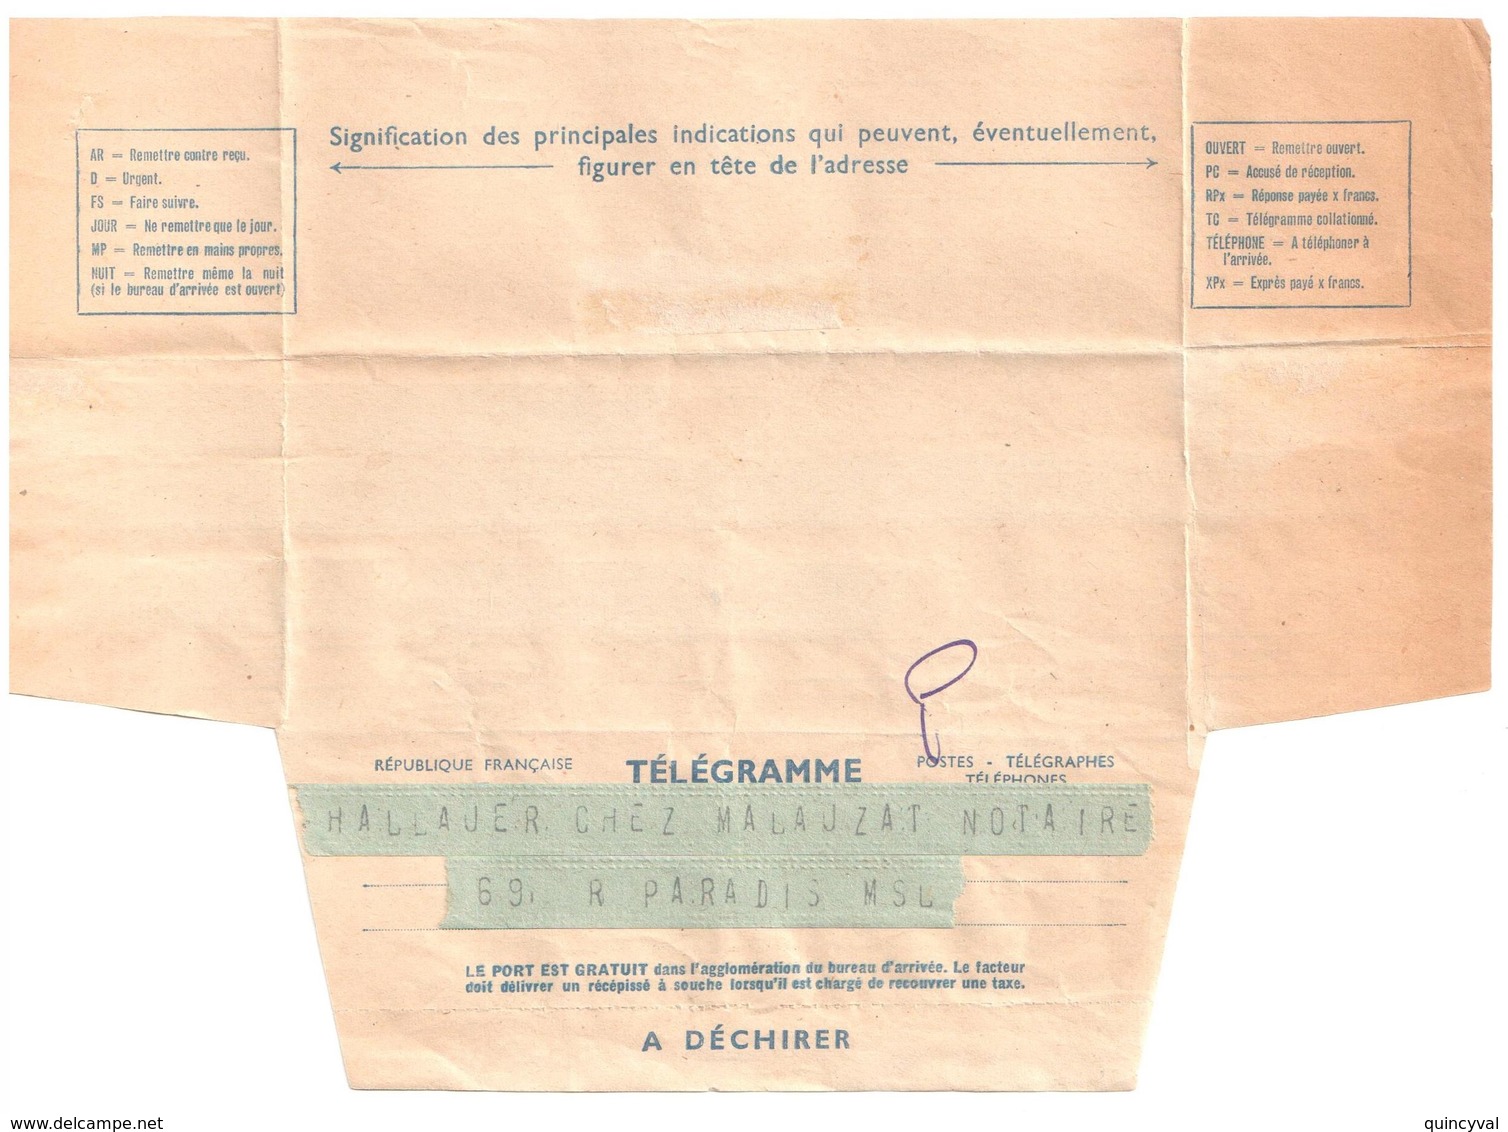 MARSEILLE St FERREL Télégramme D'Avocat   Notaire Malaujat Aff Hallauer Ob 317 1947 Formule 704 Oberthur 511 050I - Telegramas Y Teléfonos